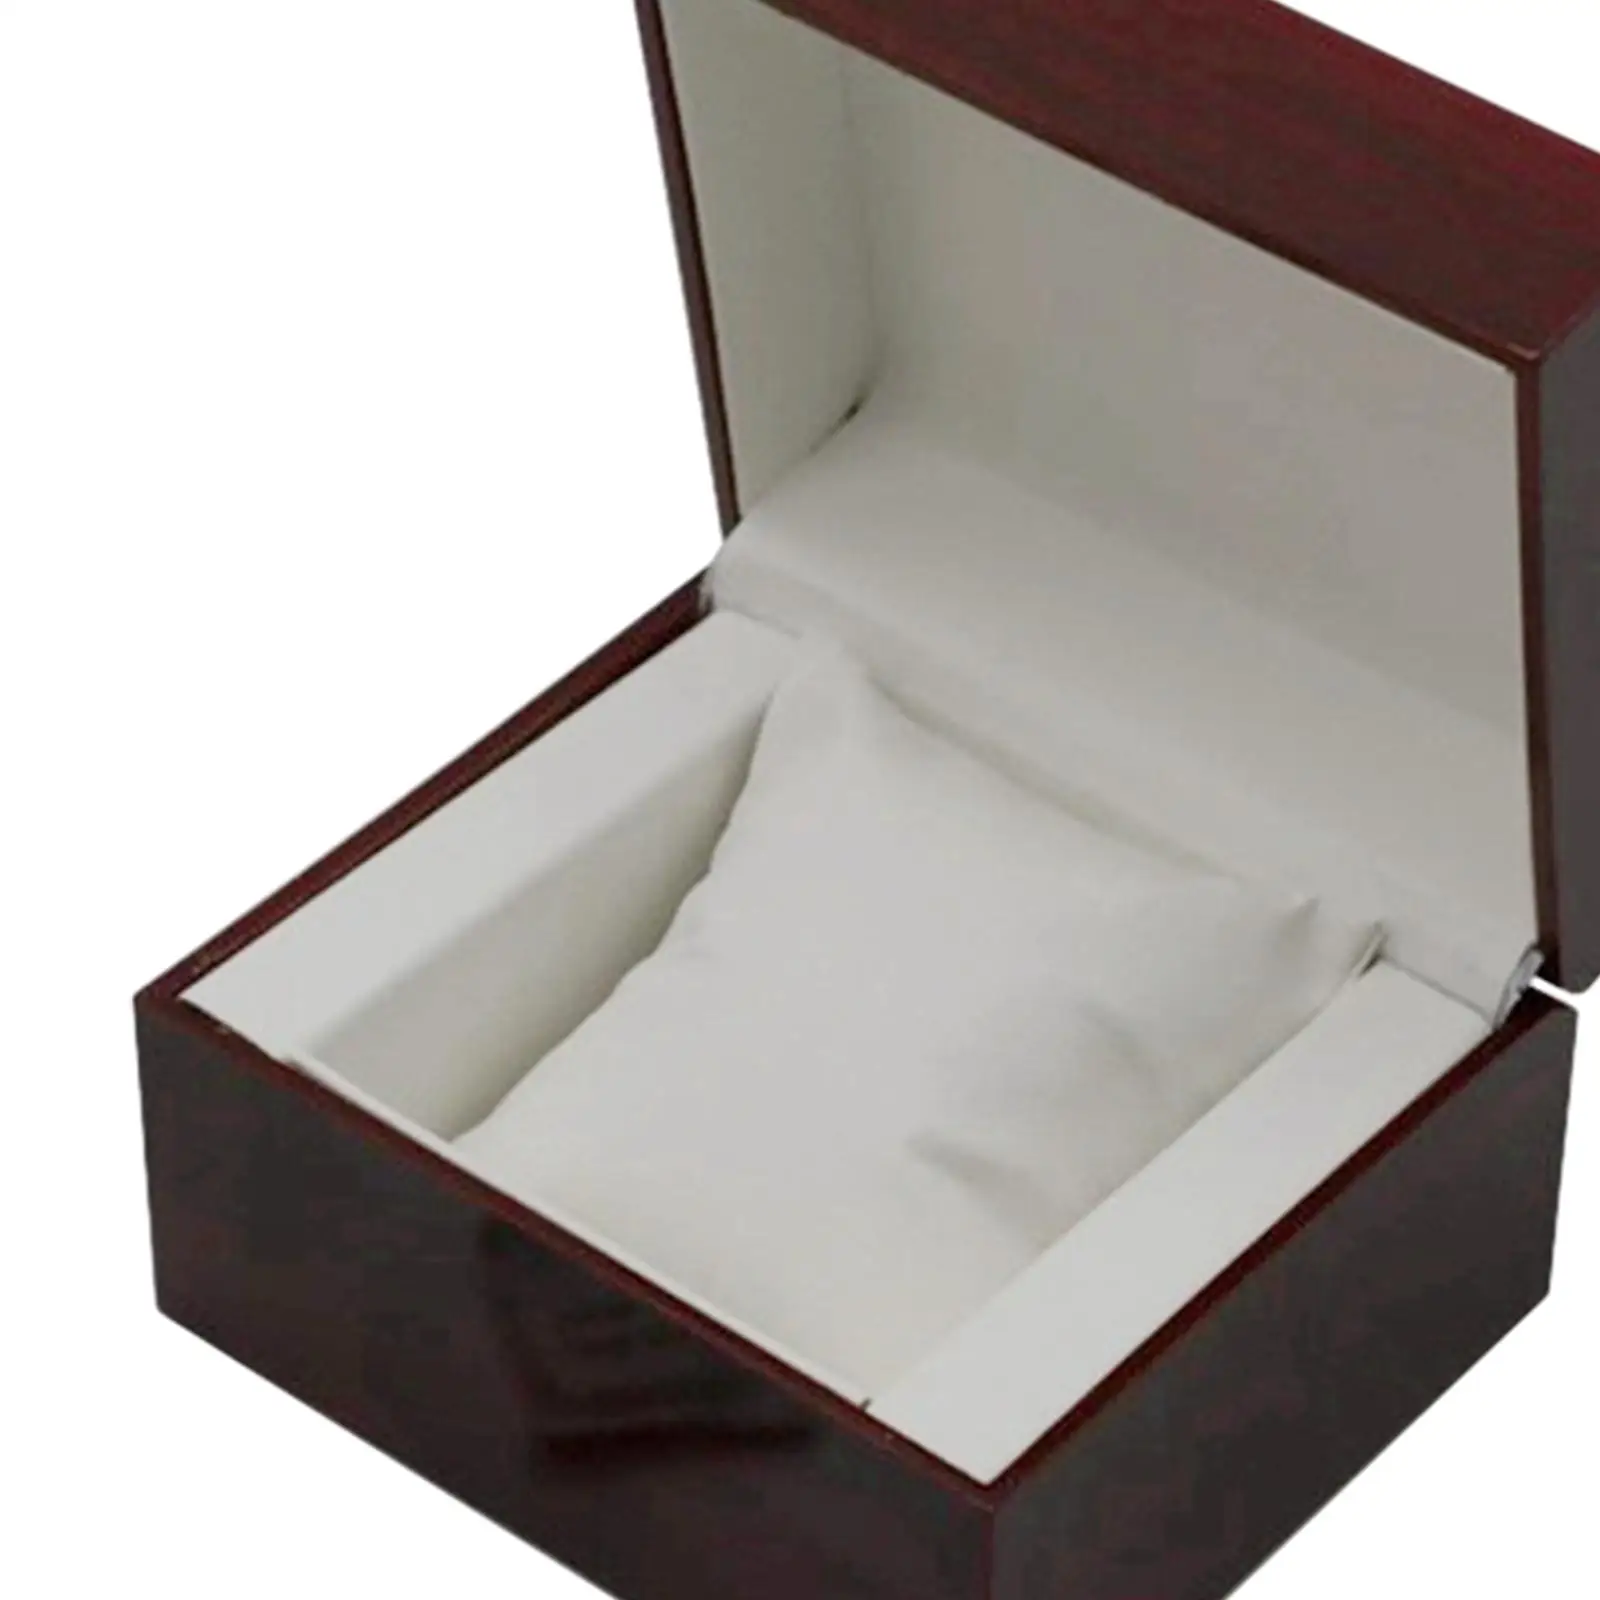 Single Watch Jewelry Box Wood Portable Jewelry Box Watch Storage Travel Case for Rings Pendant Earrings Stud Bracelet Necklace